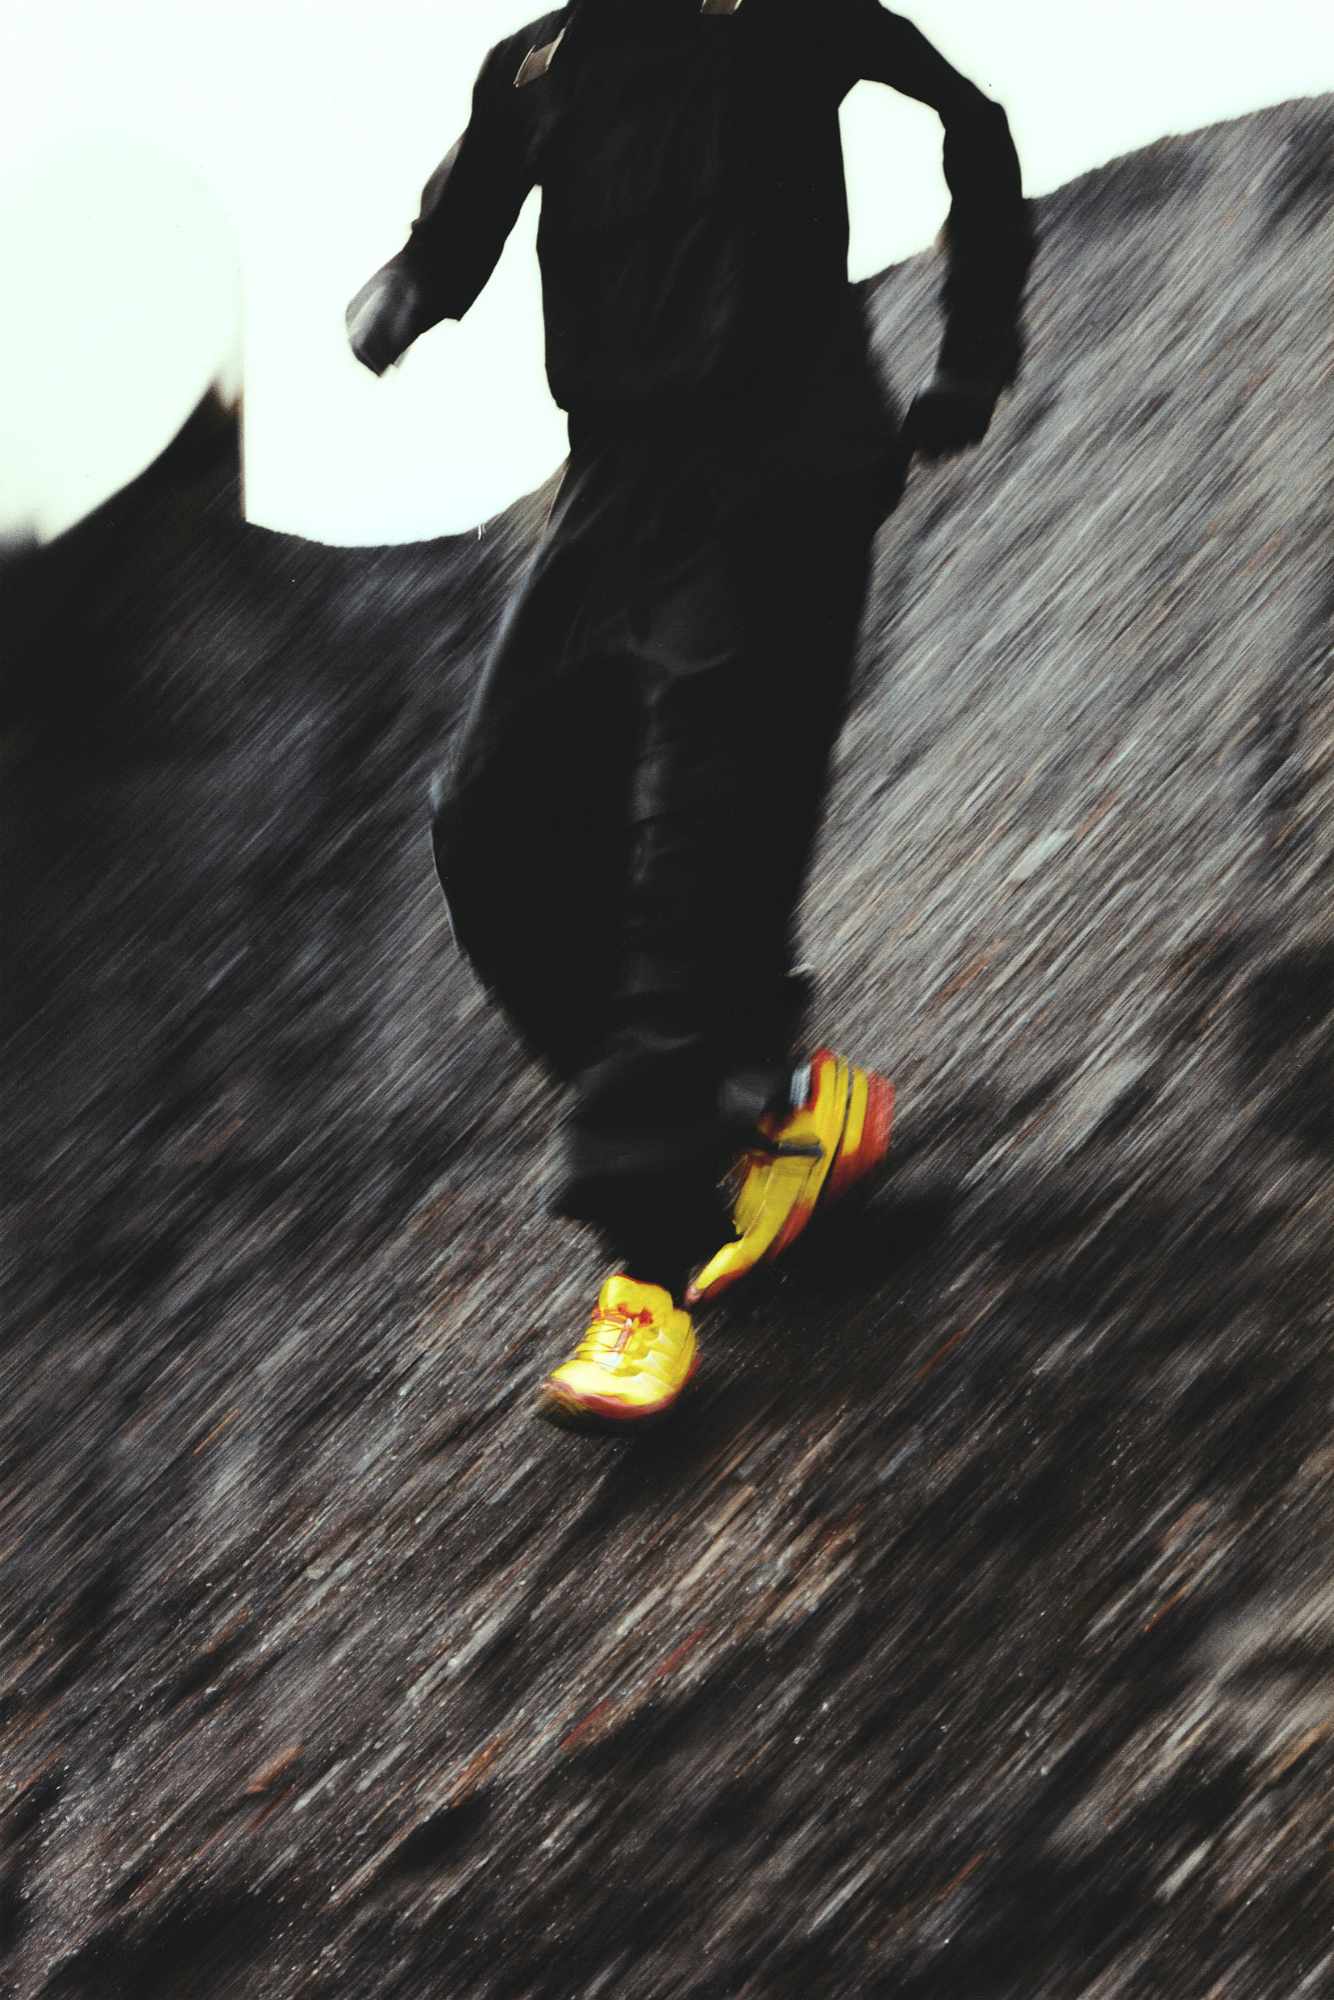 Salomon's Speedcross 3 sneaker in sulphur yellow